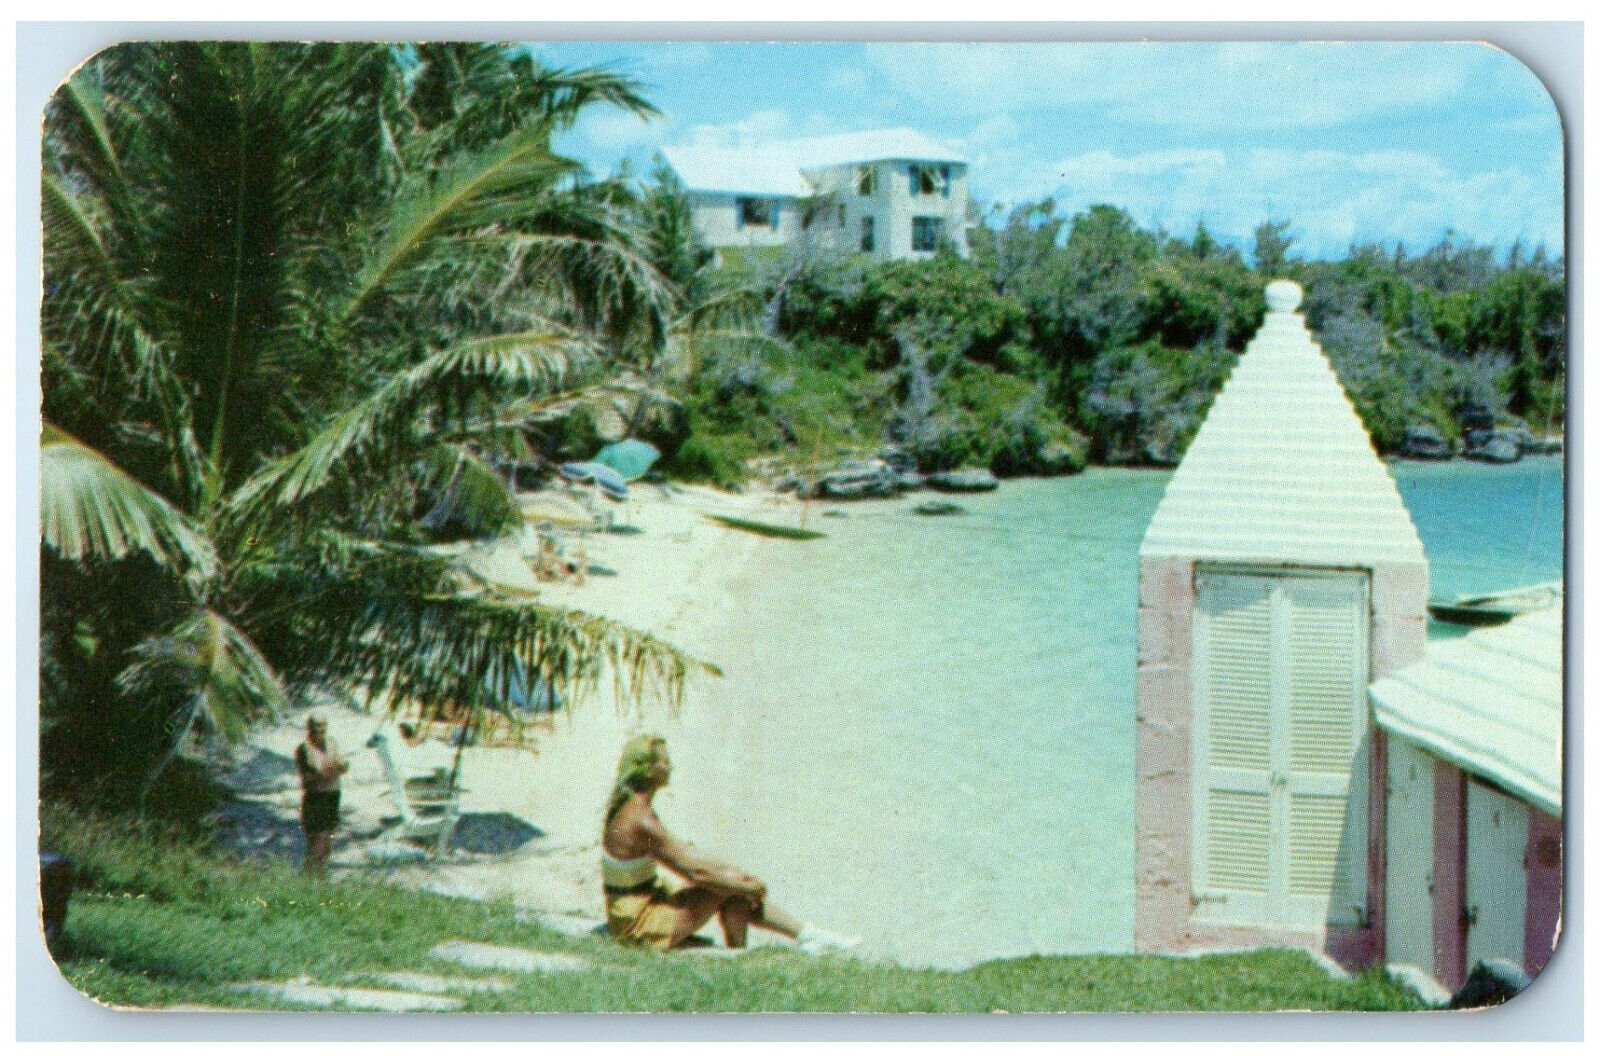 1954 Cambridge Beaches Mangrove Bay Somerset Island Bermuda Posted Postcard